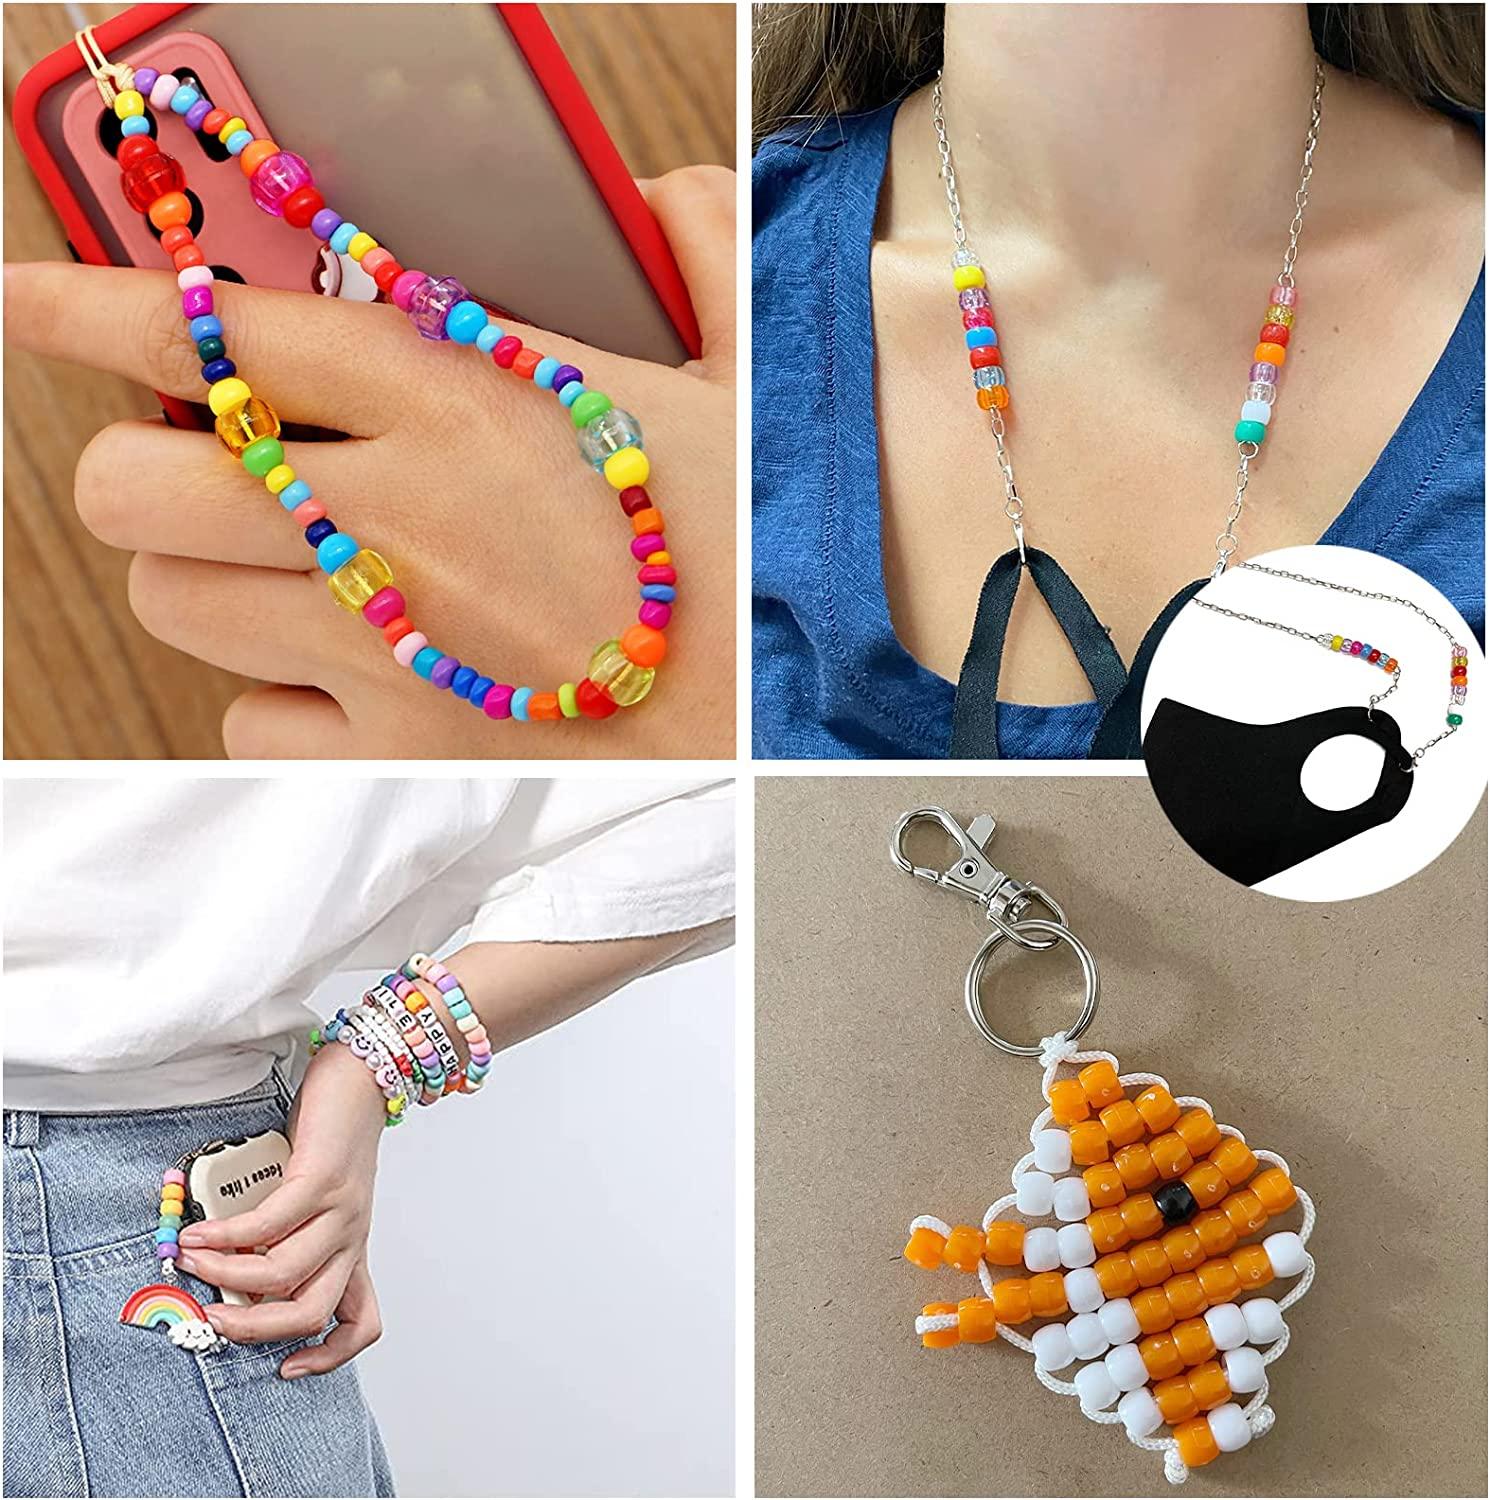 Colored beads bracelets